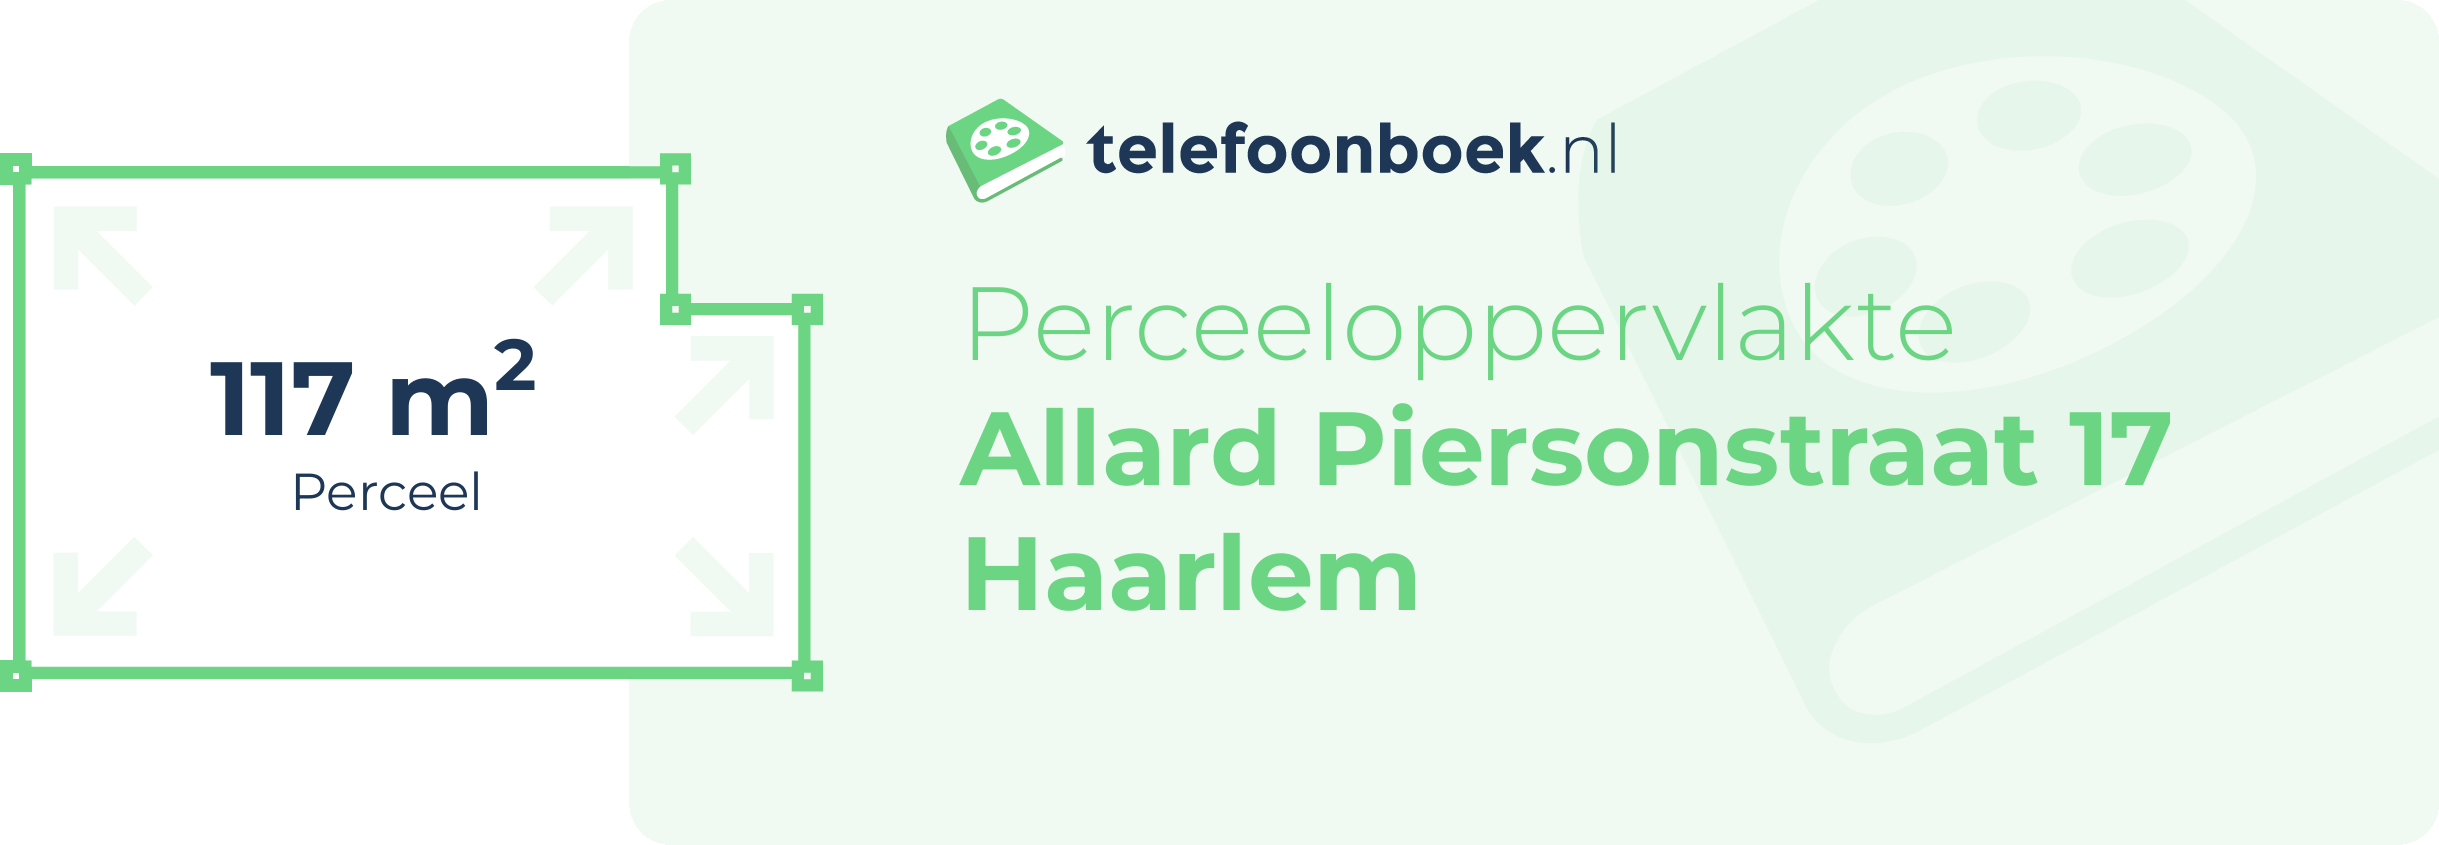 Perceeloppervlakte Allard Piersonstraat 17 Haarlem